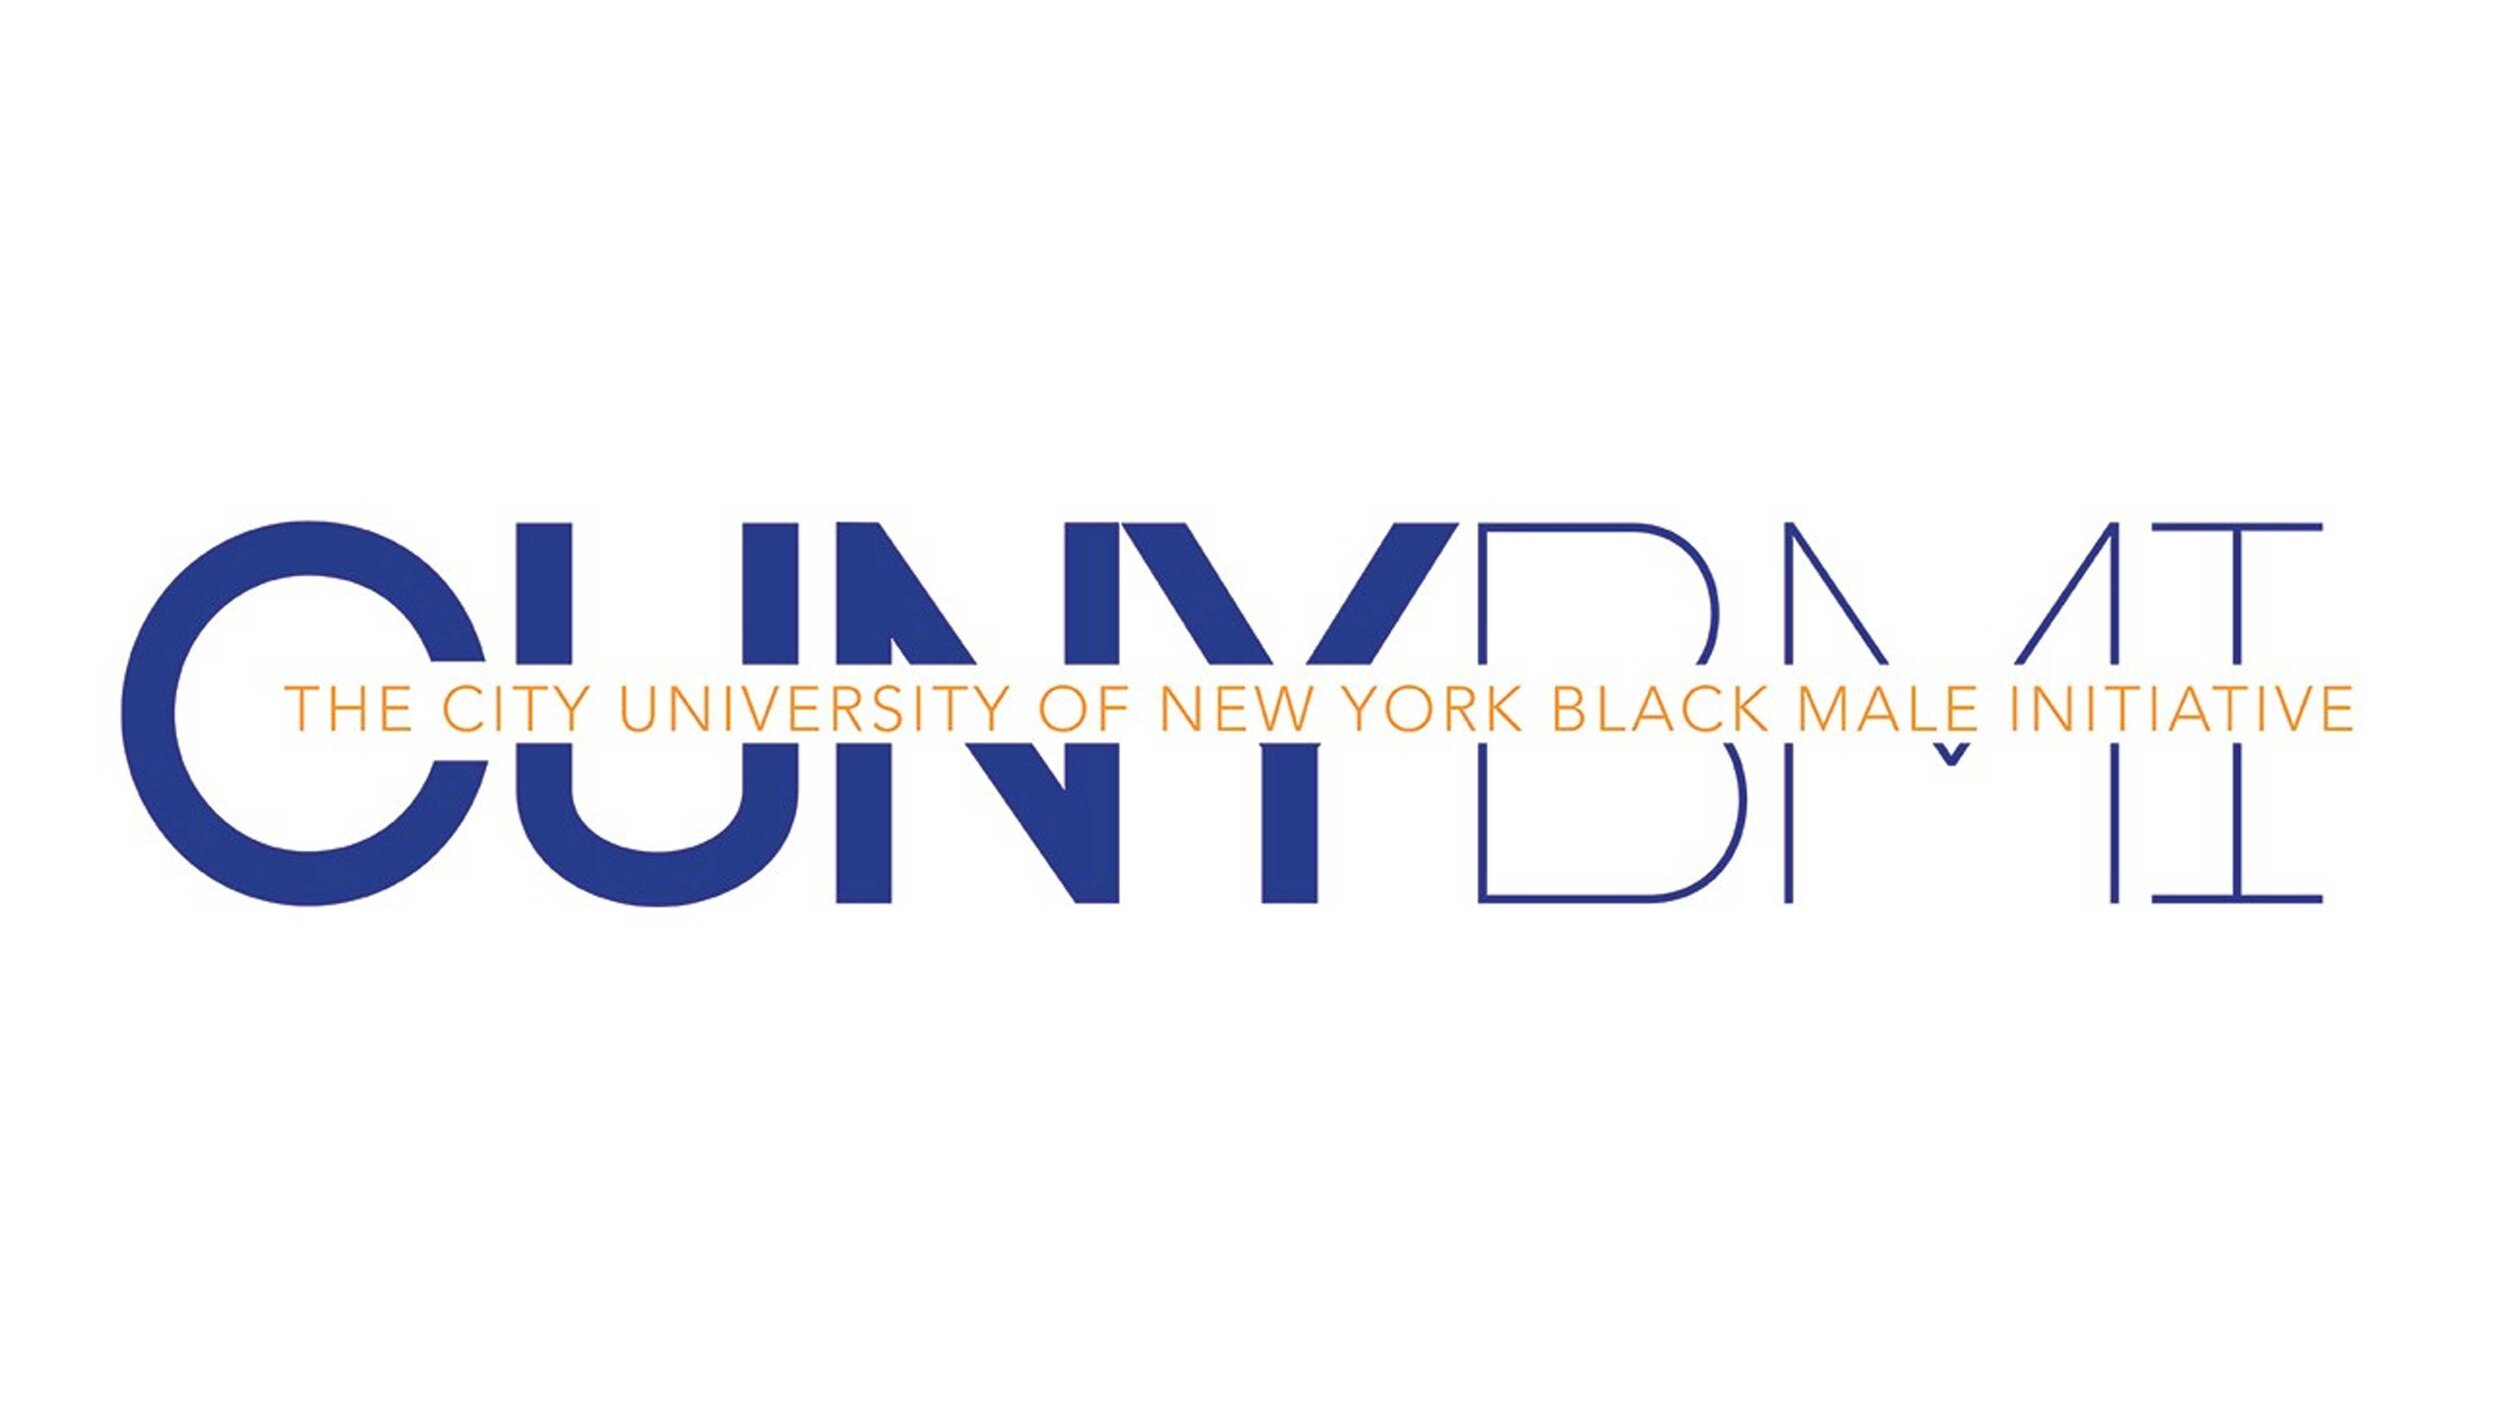 CUNYBMI | The City University of New York Black Male Initiative logo